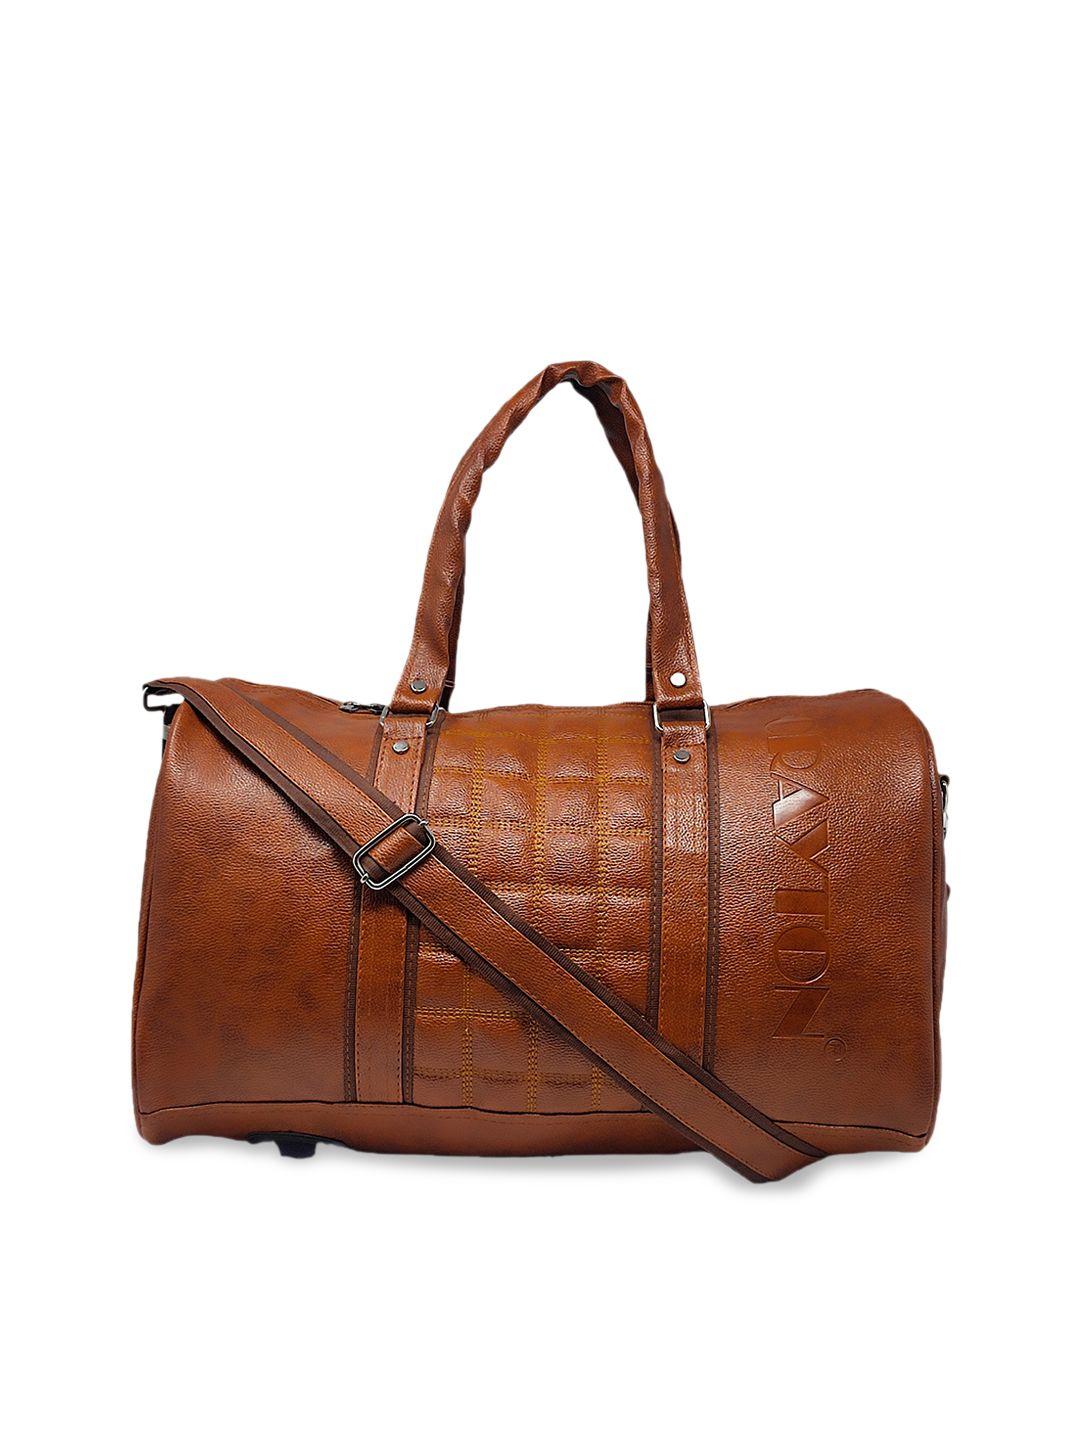 crayton textured leather duffel bag